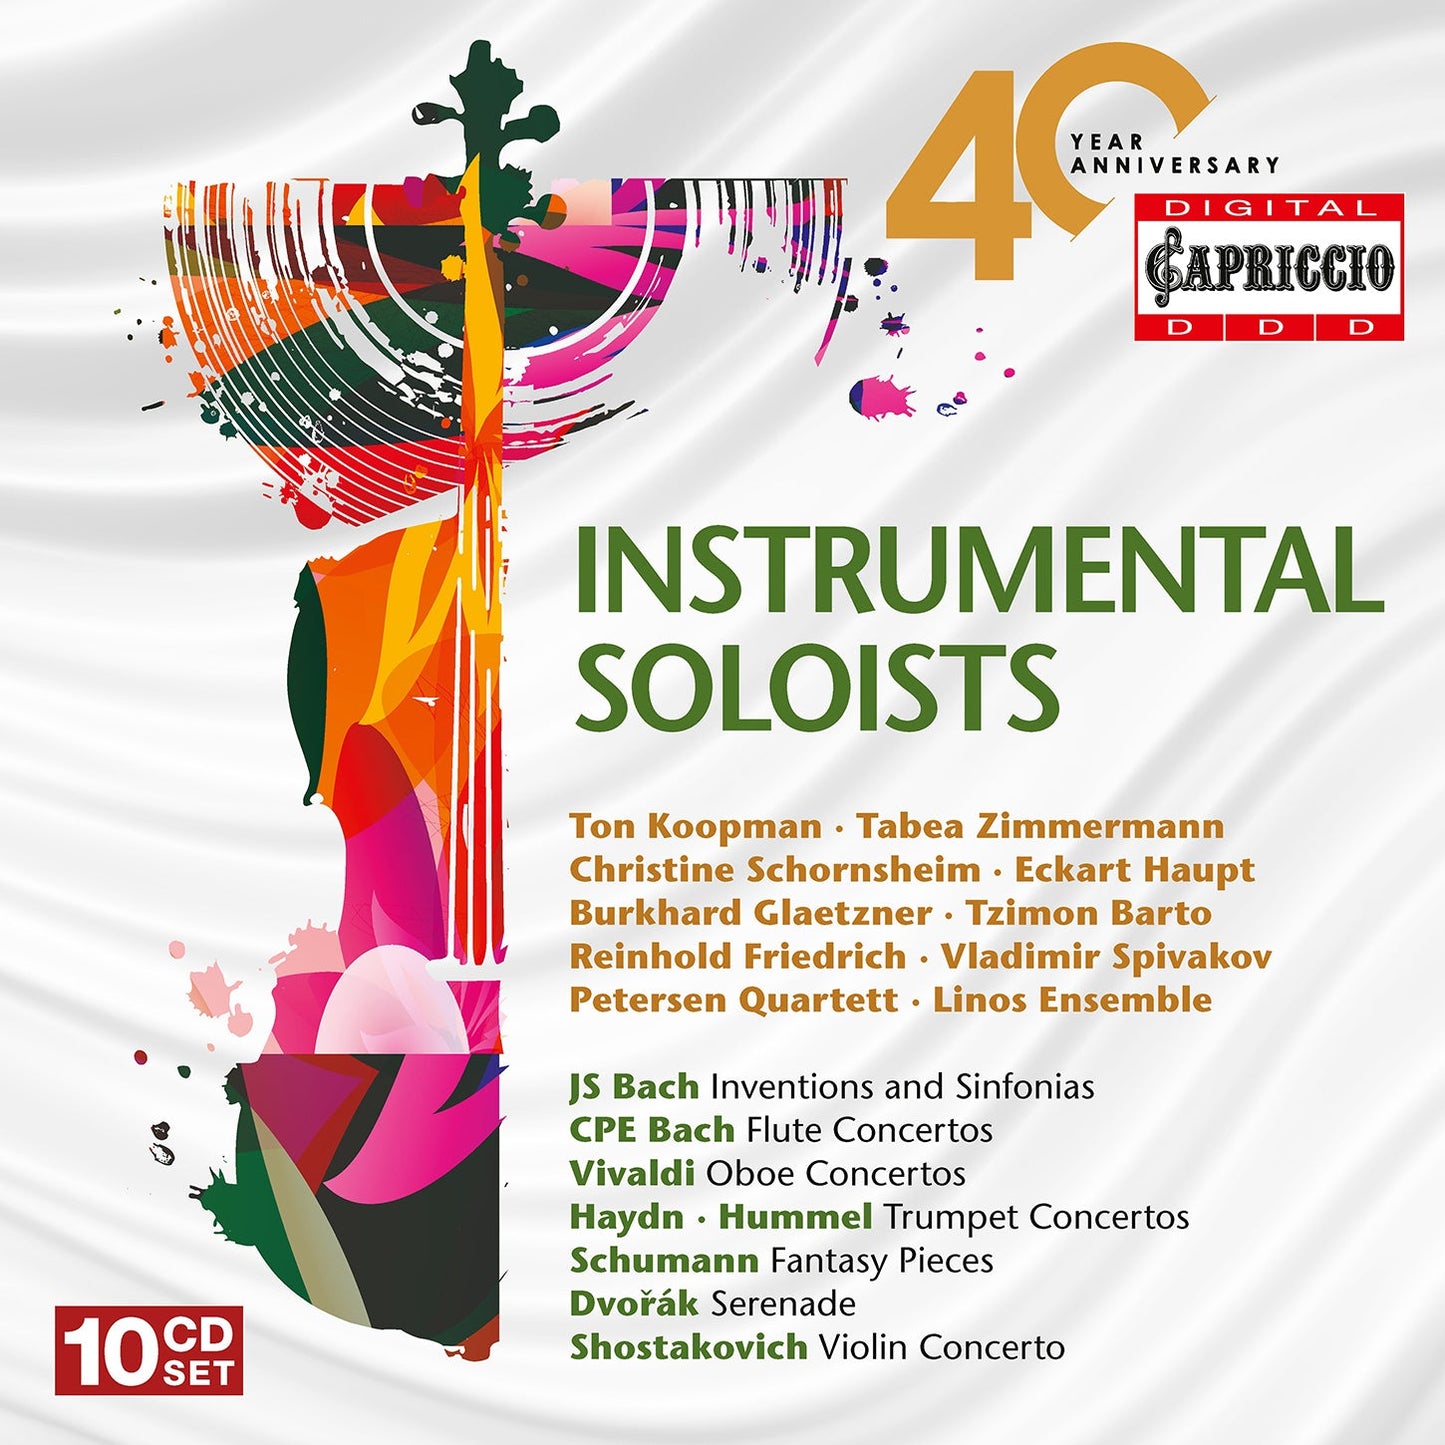 Capriccio 40 Year Anniversary - Instrumental Soloists Box Set [10 CDs]